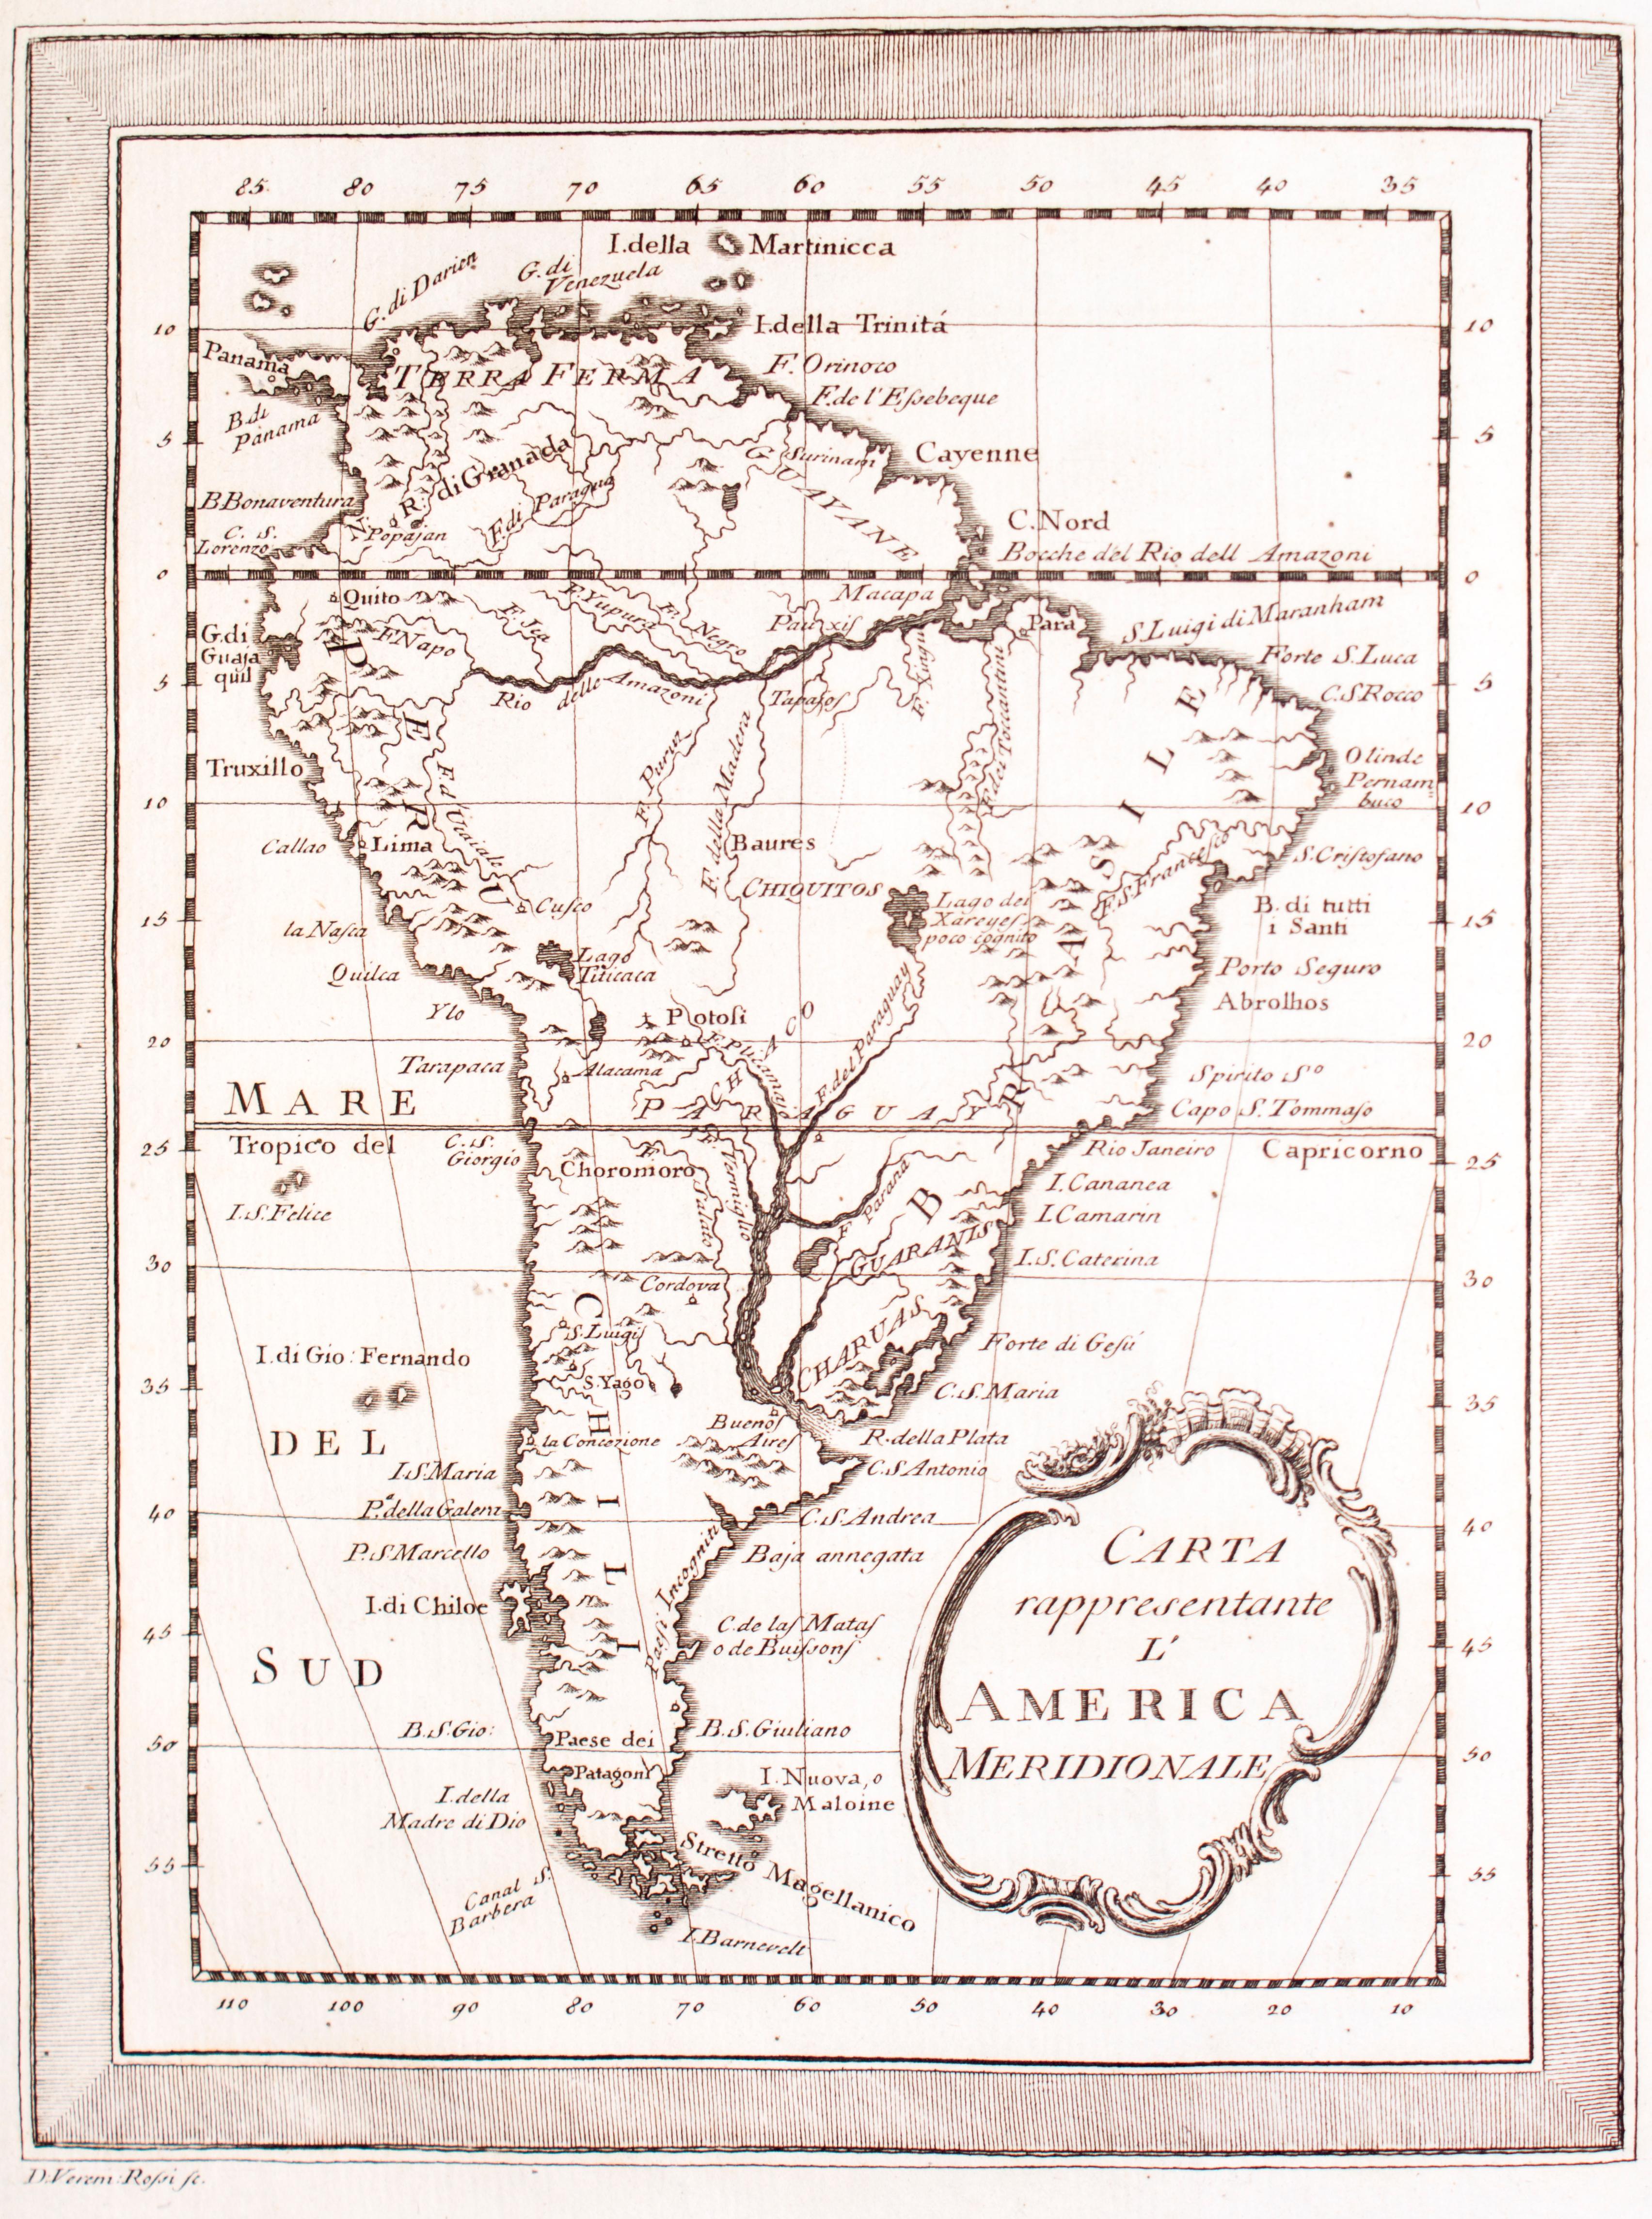 Il Gazzettiere Americano - Ancient Illustrated Book on the Americas - 1763 For Sale 7